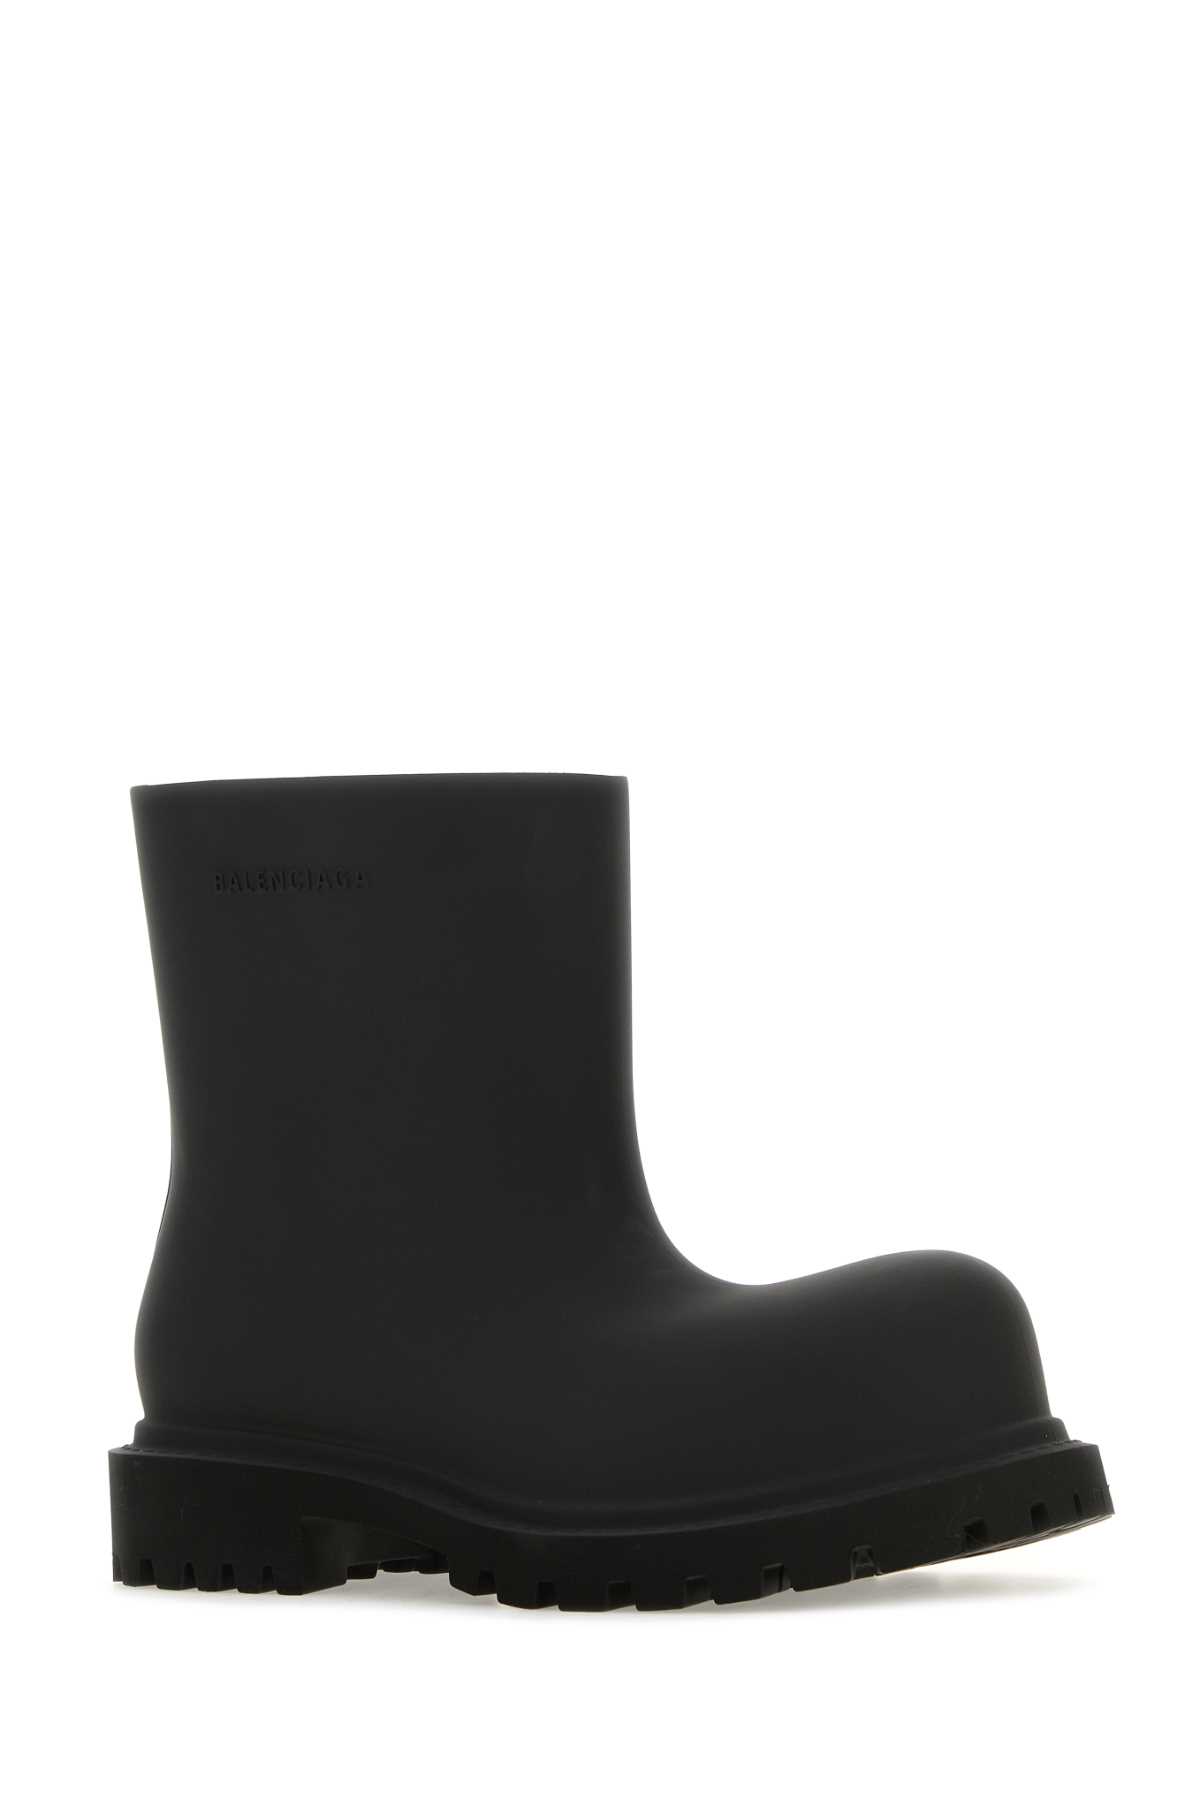 Shop Balenciaga Black Eva Steroid Ankle Boots